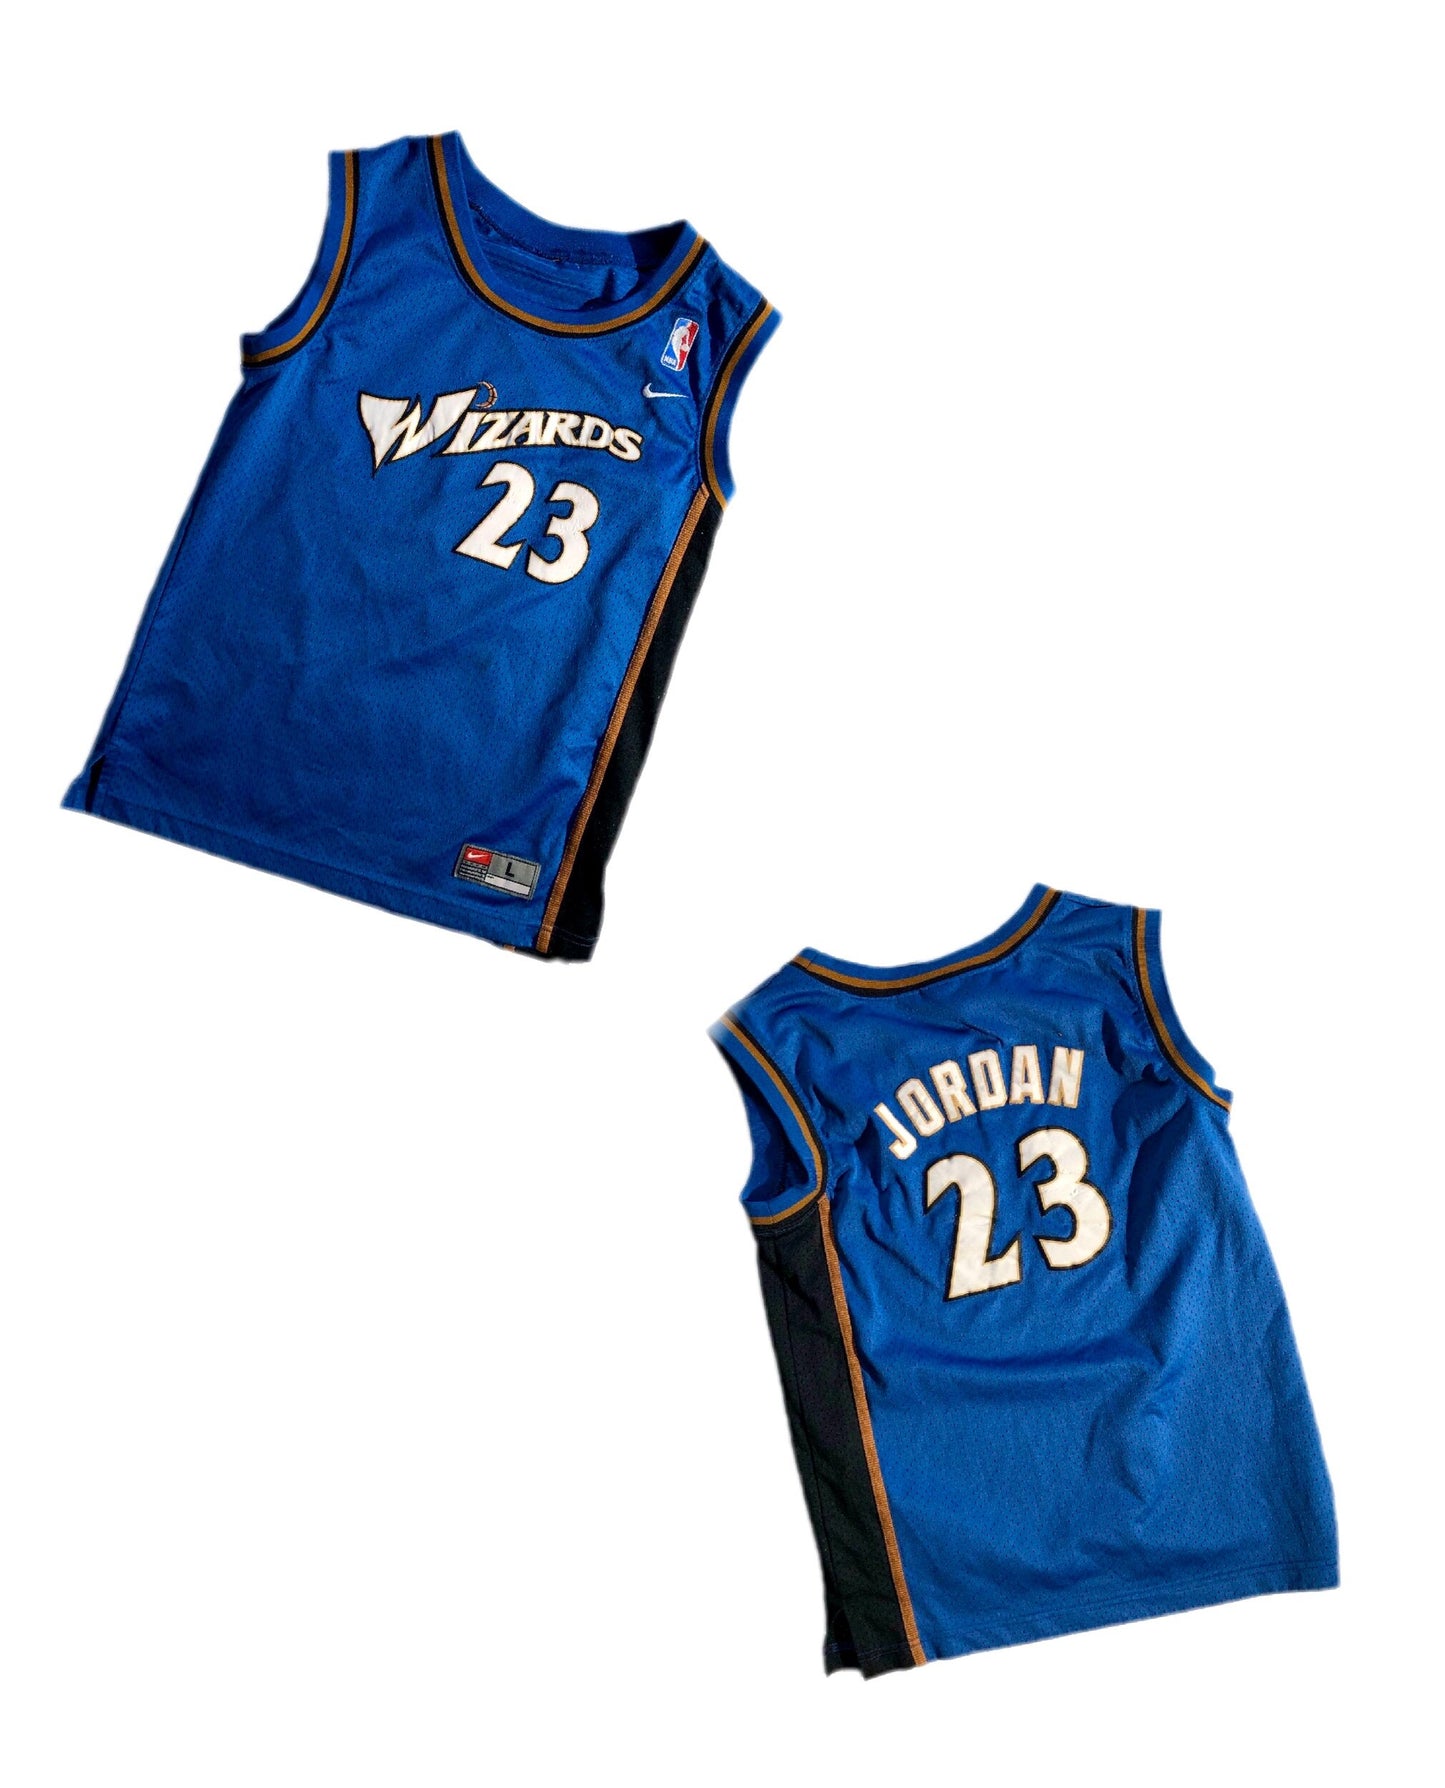 Vintage Jordan Jersey (Wizards)